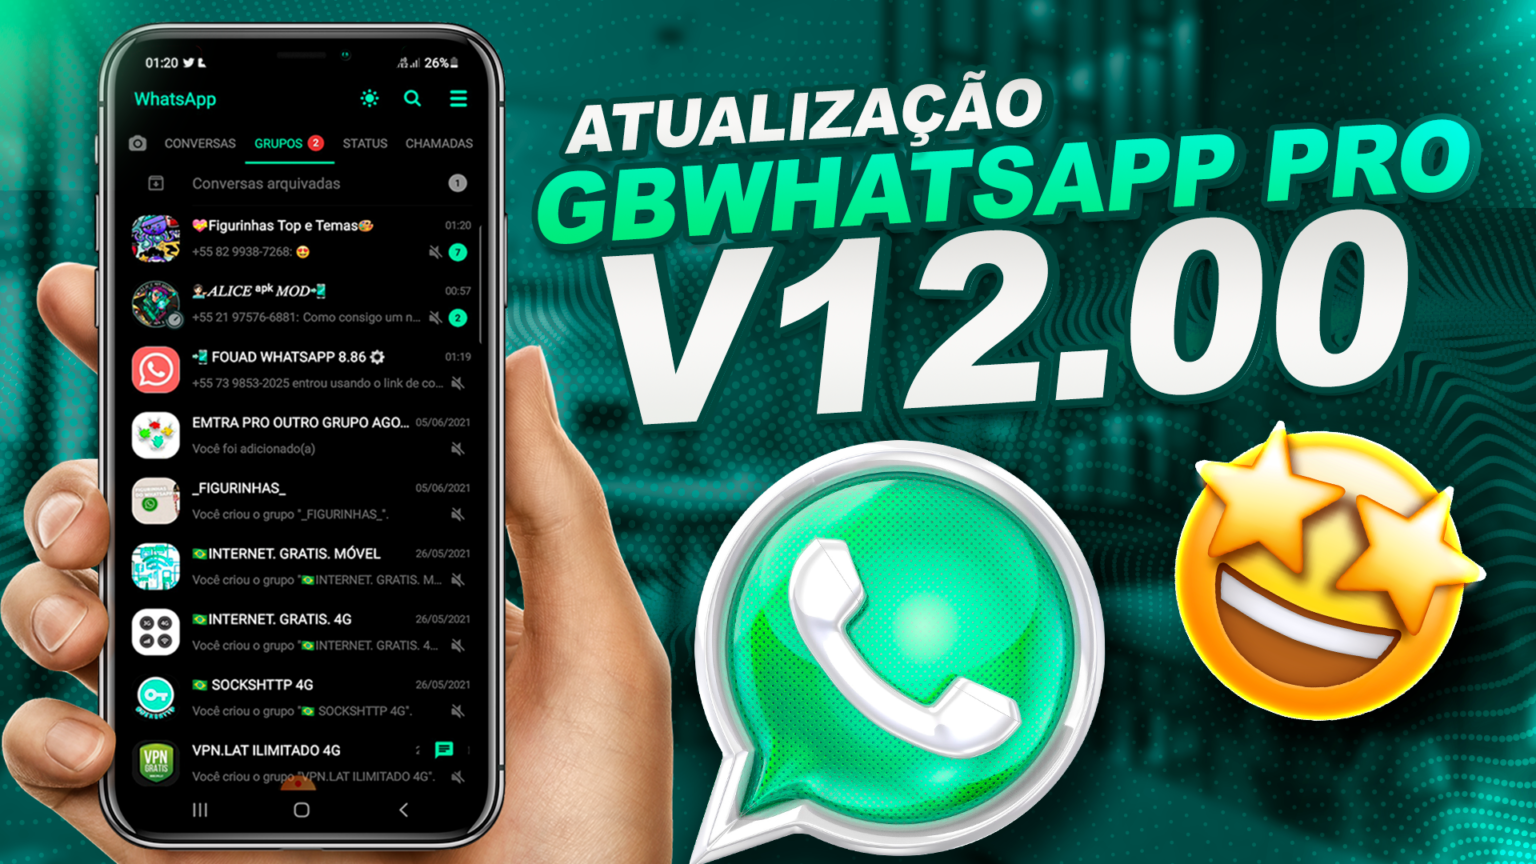 gbwhatsapp pro v12 00 download